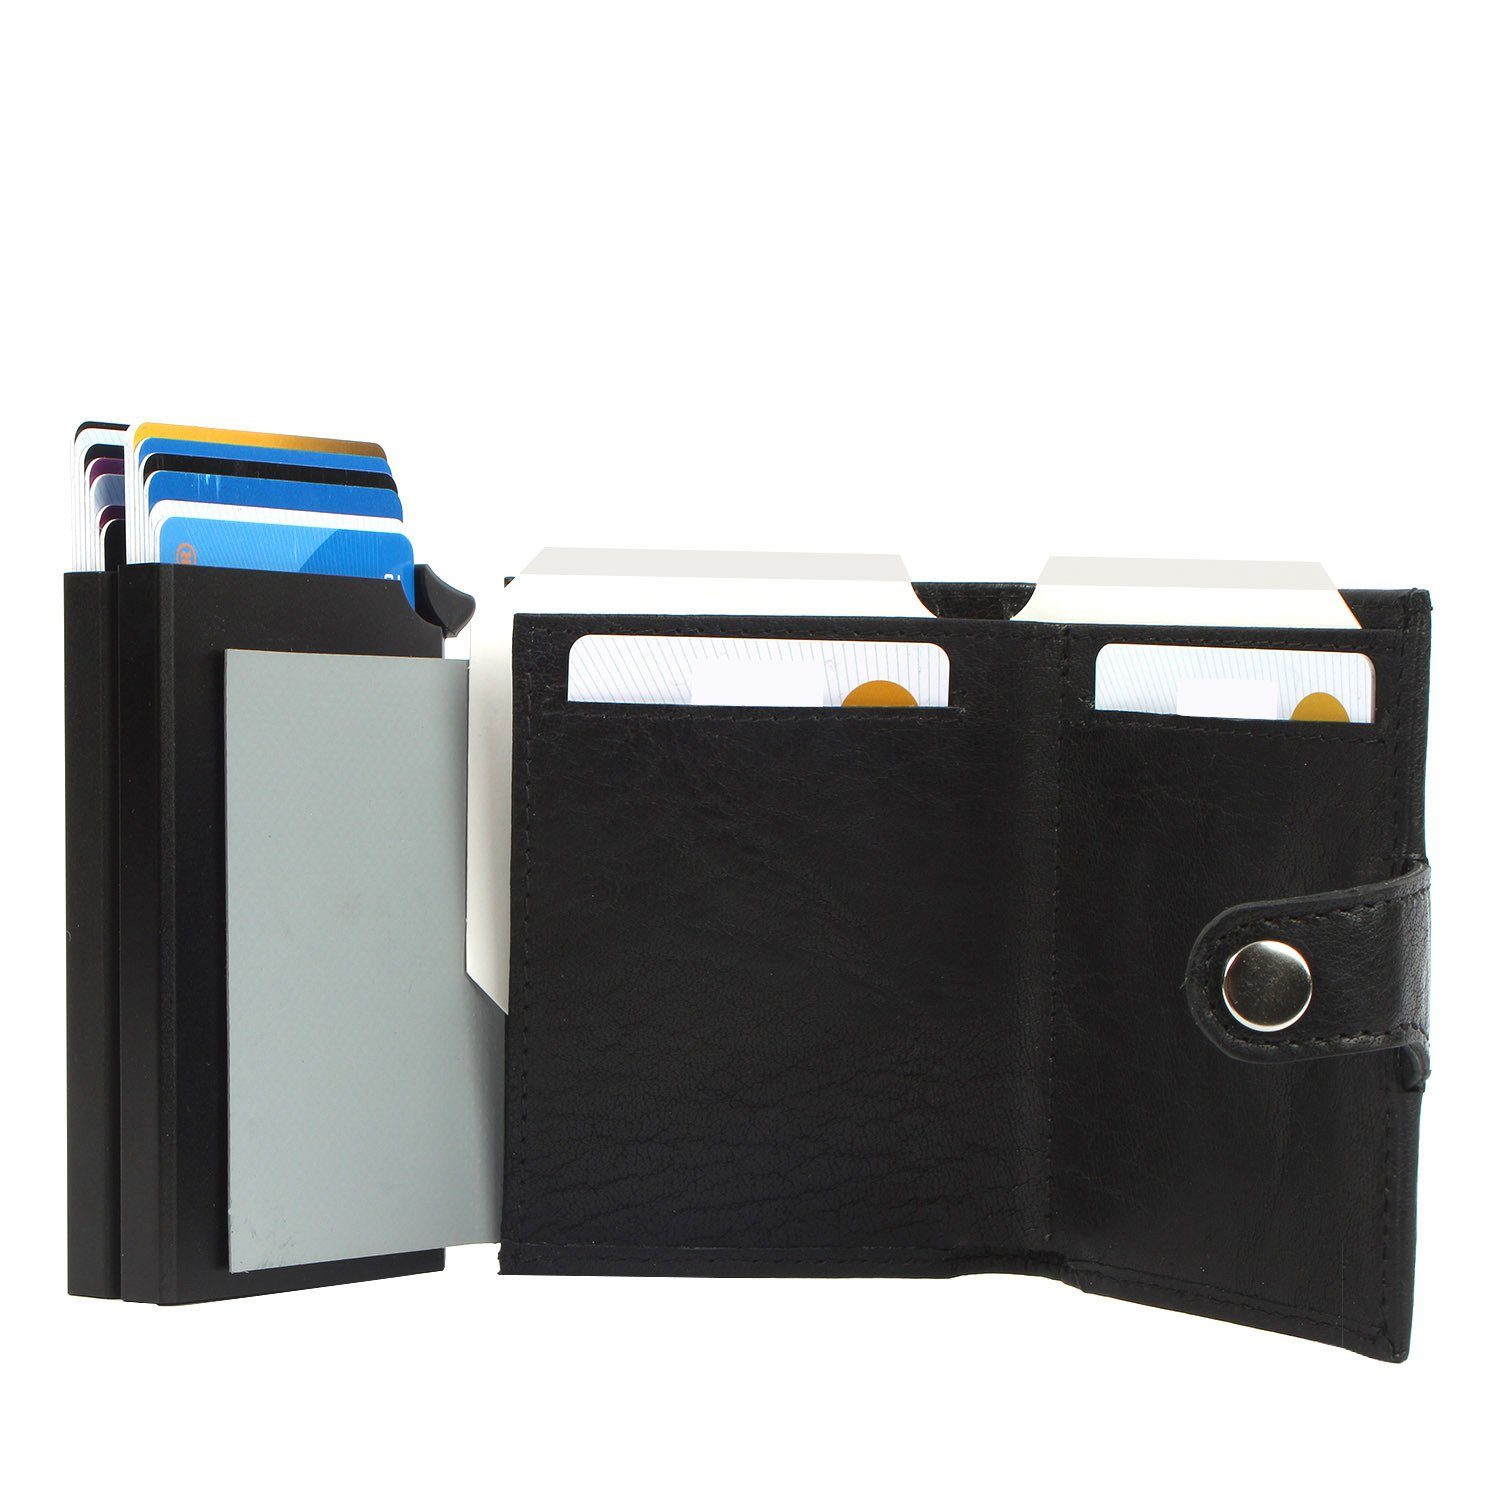 RFID Mini aus noonyu Leder Geldbörse Upcycling double Margelisch Kreditkartenbörse deepblack leather,